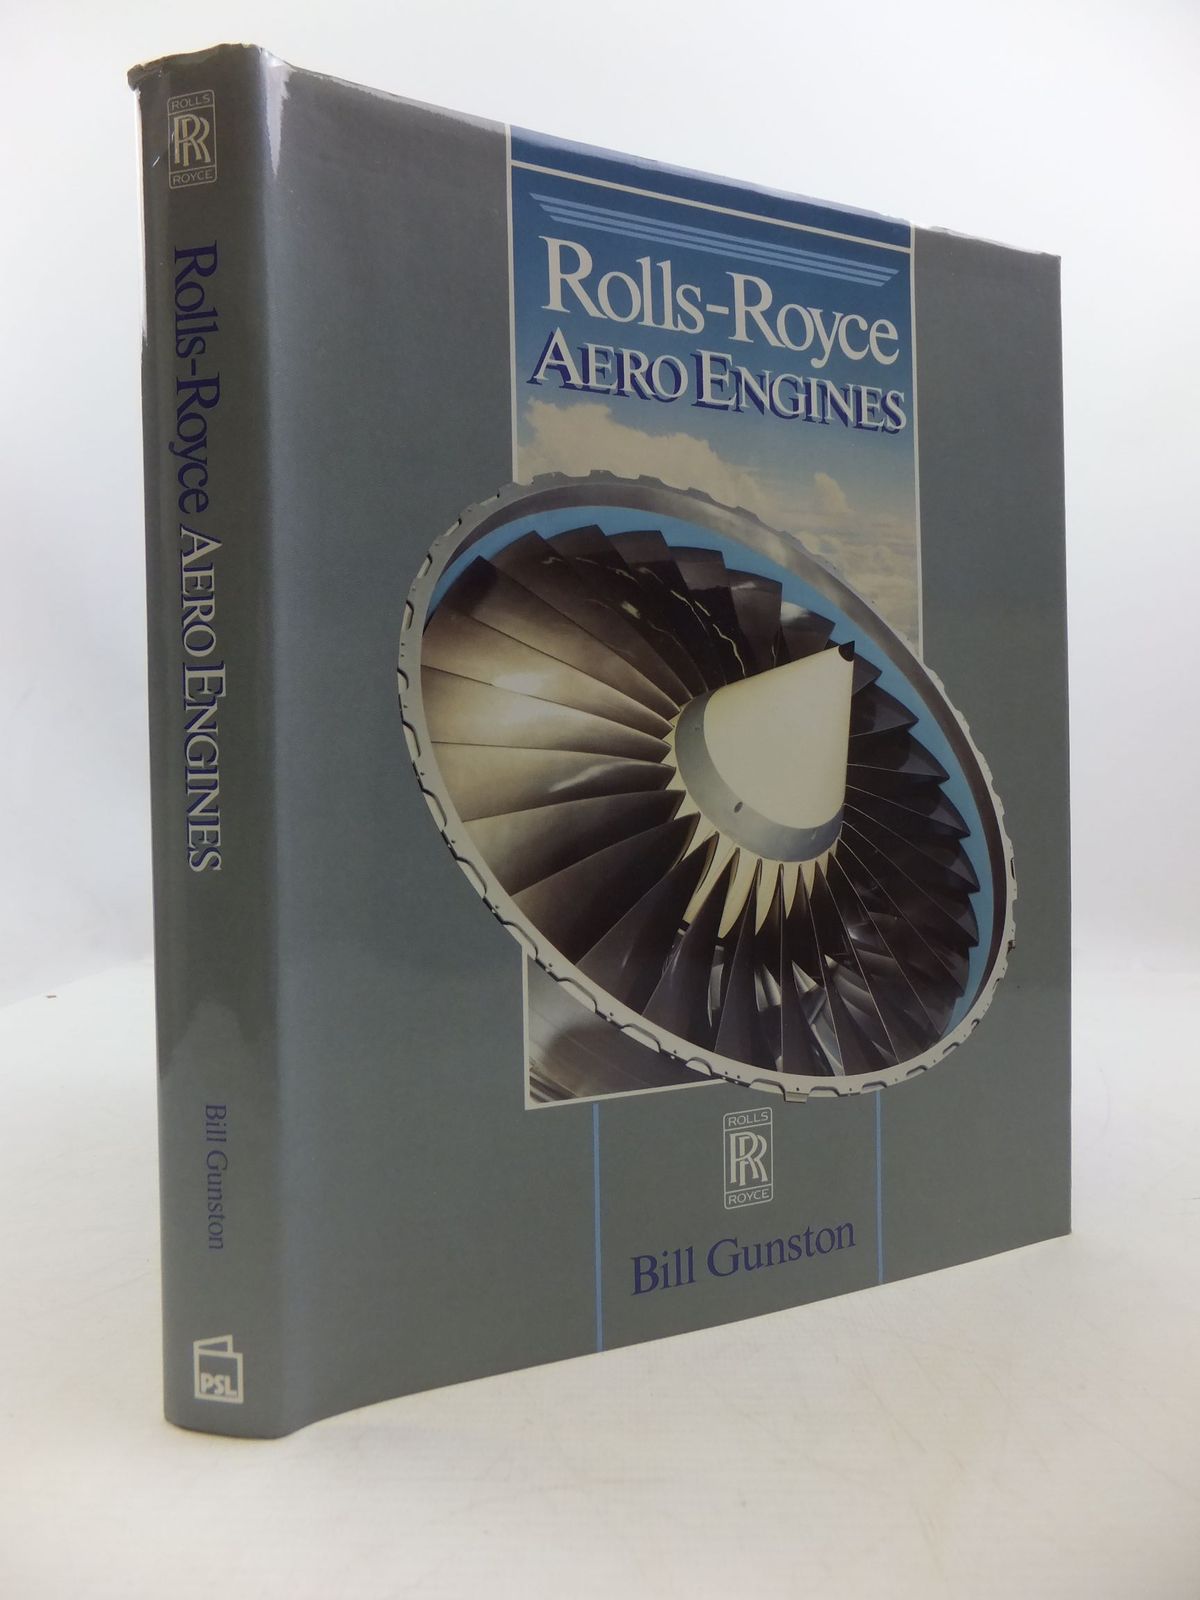 Rolls Royce Jet Engines Book Download - Jet engine maker Rolls-Royce